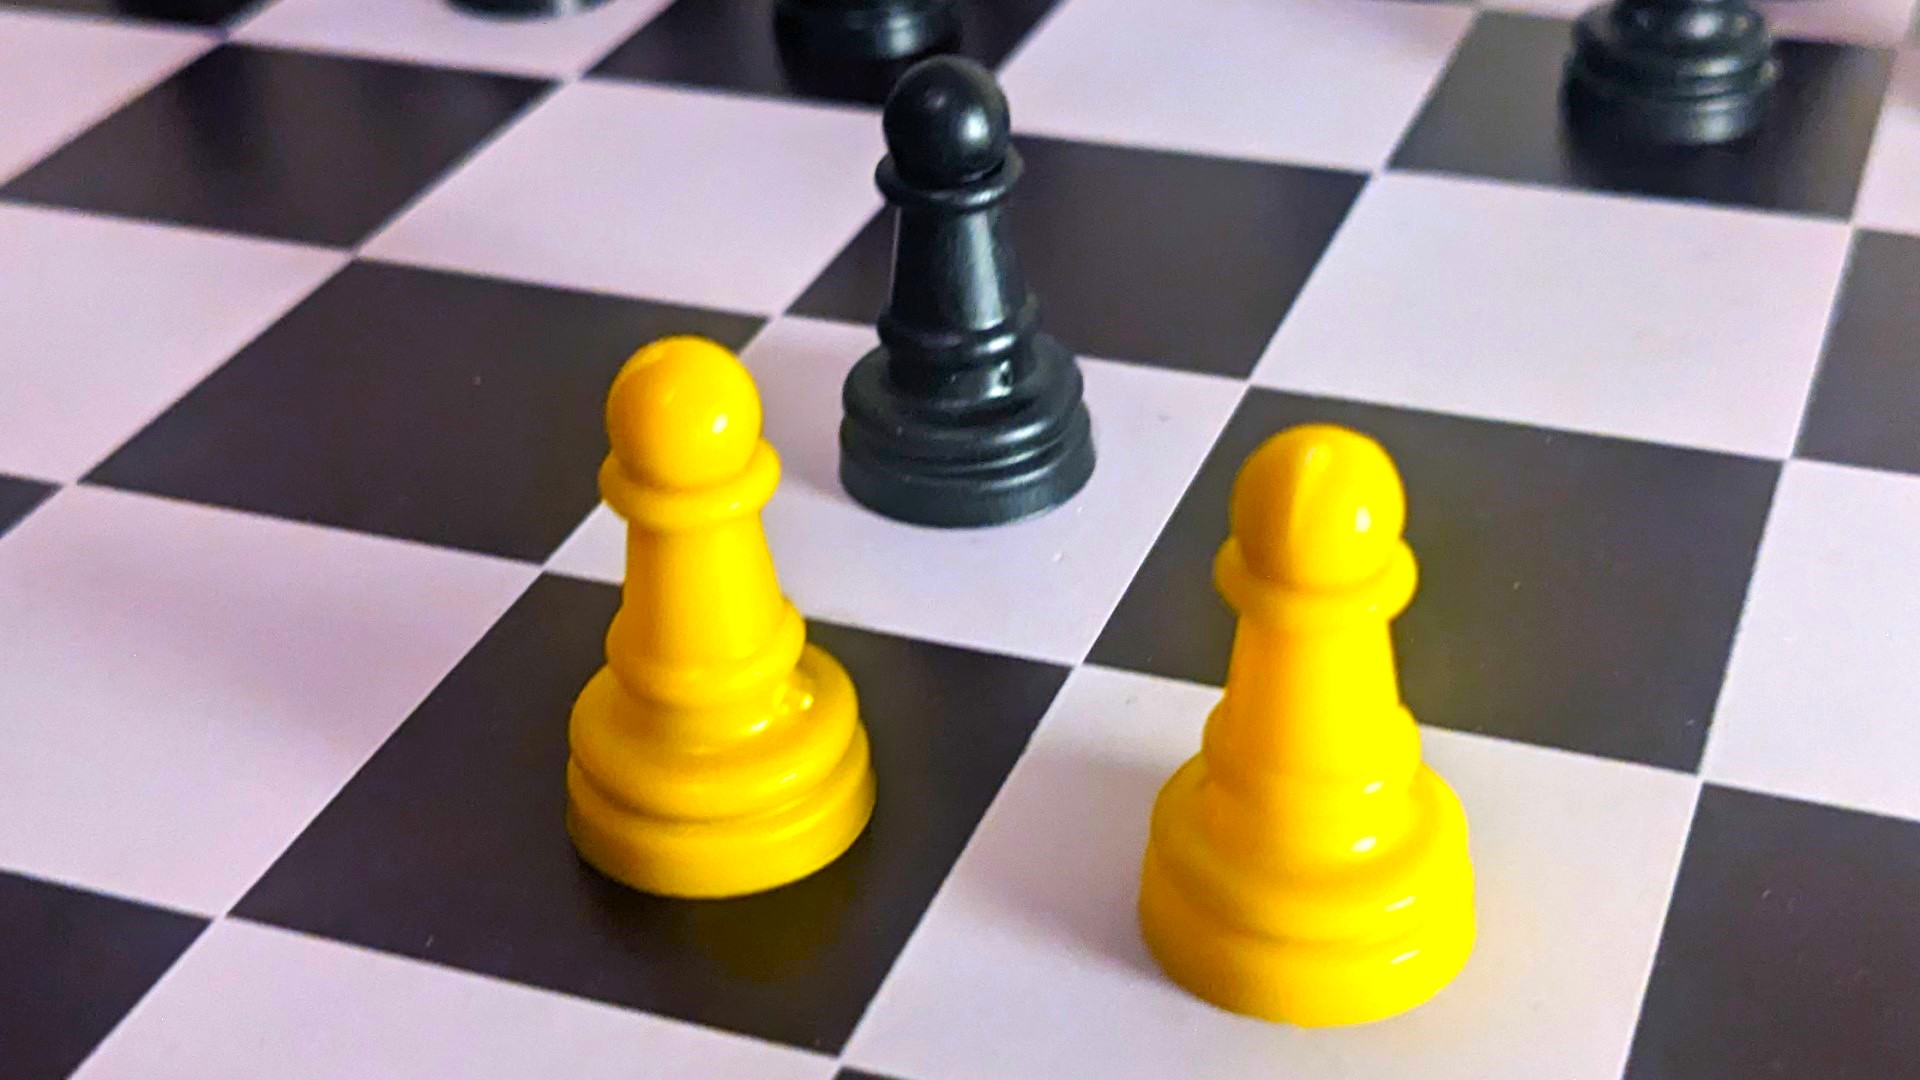 Back to Basics: Chess Openings